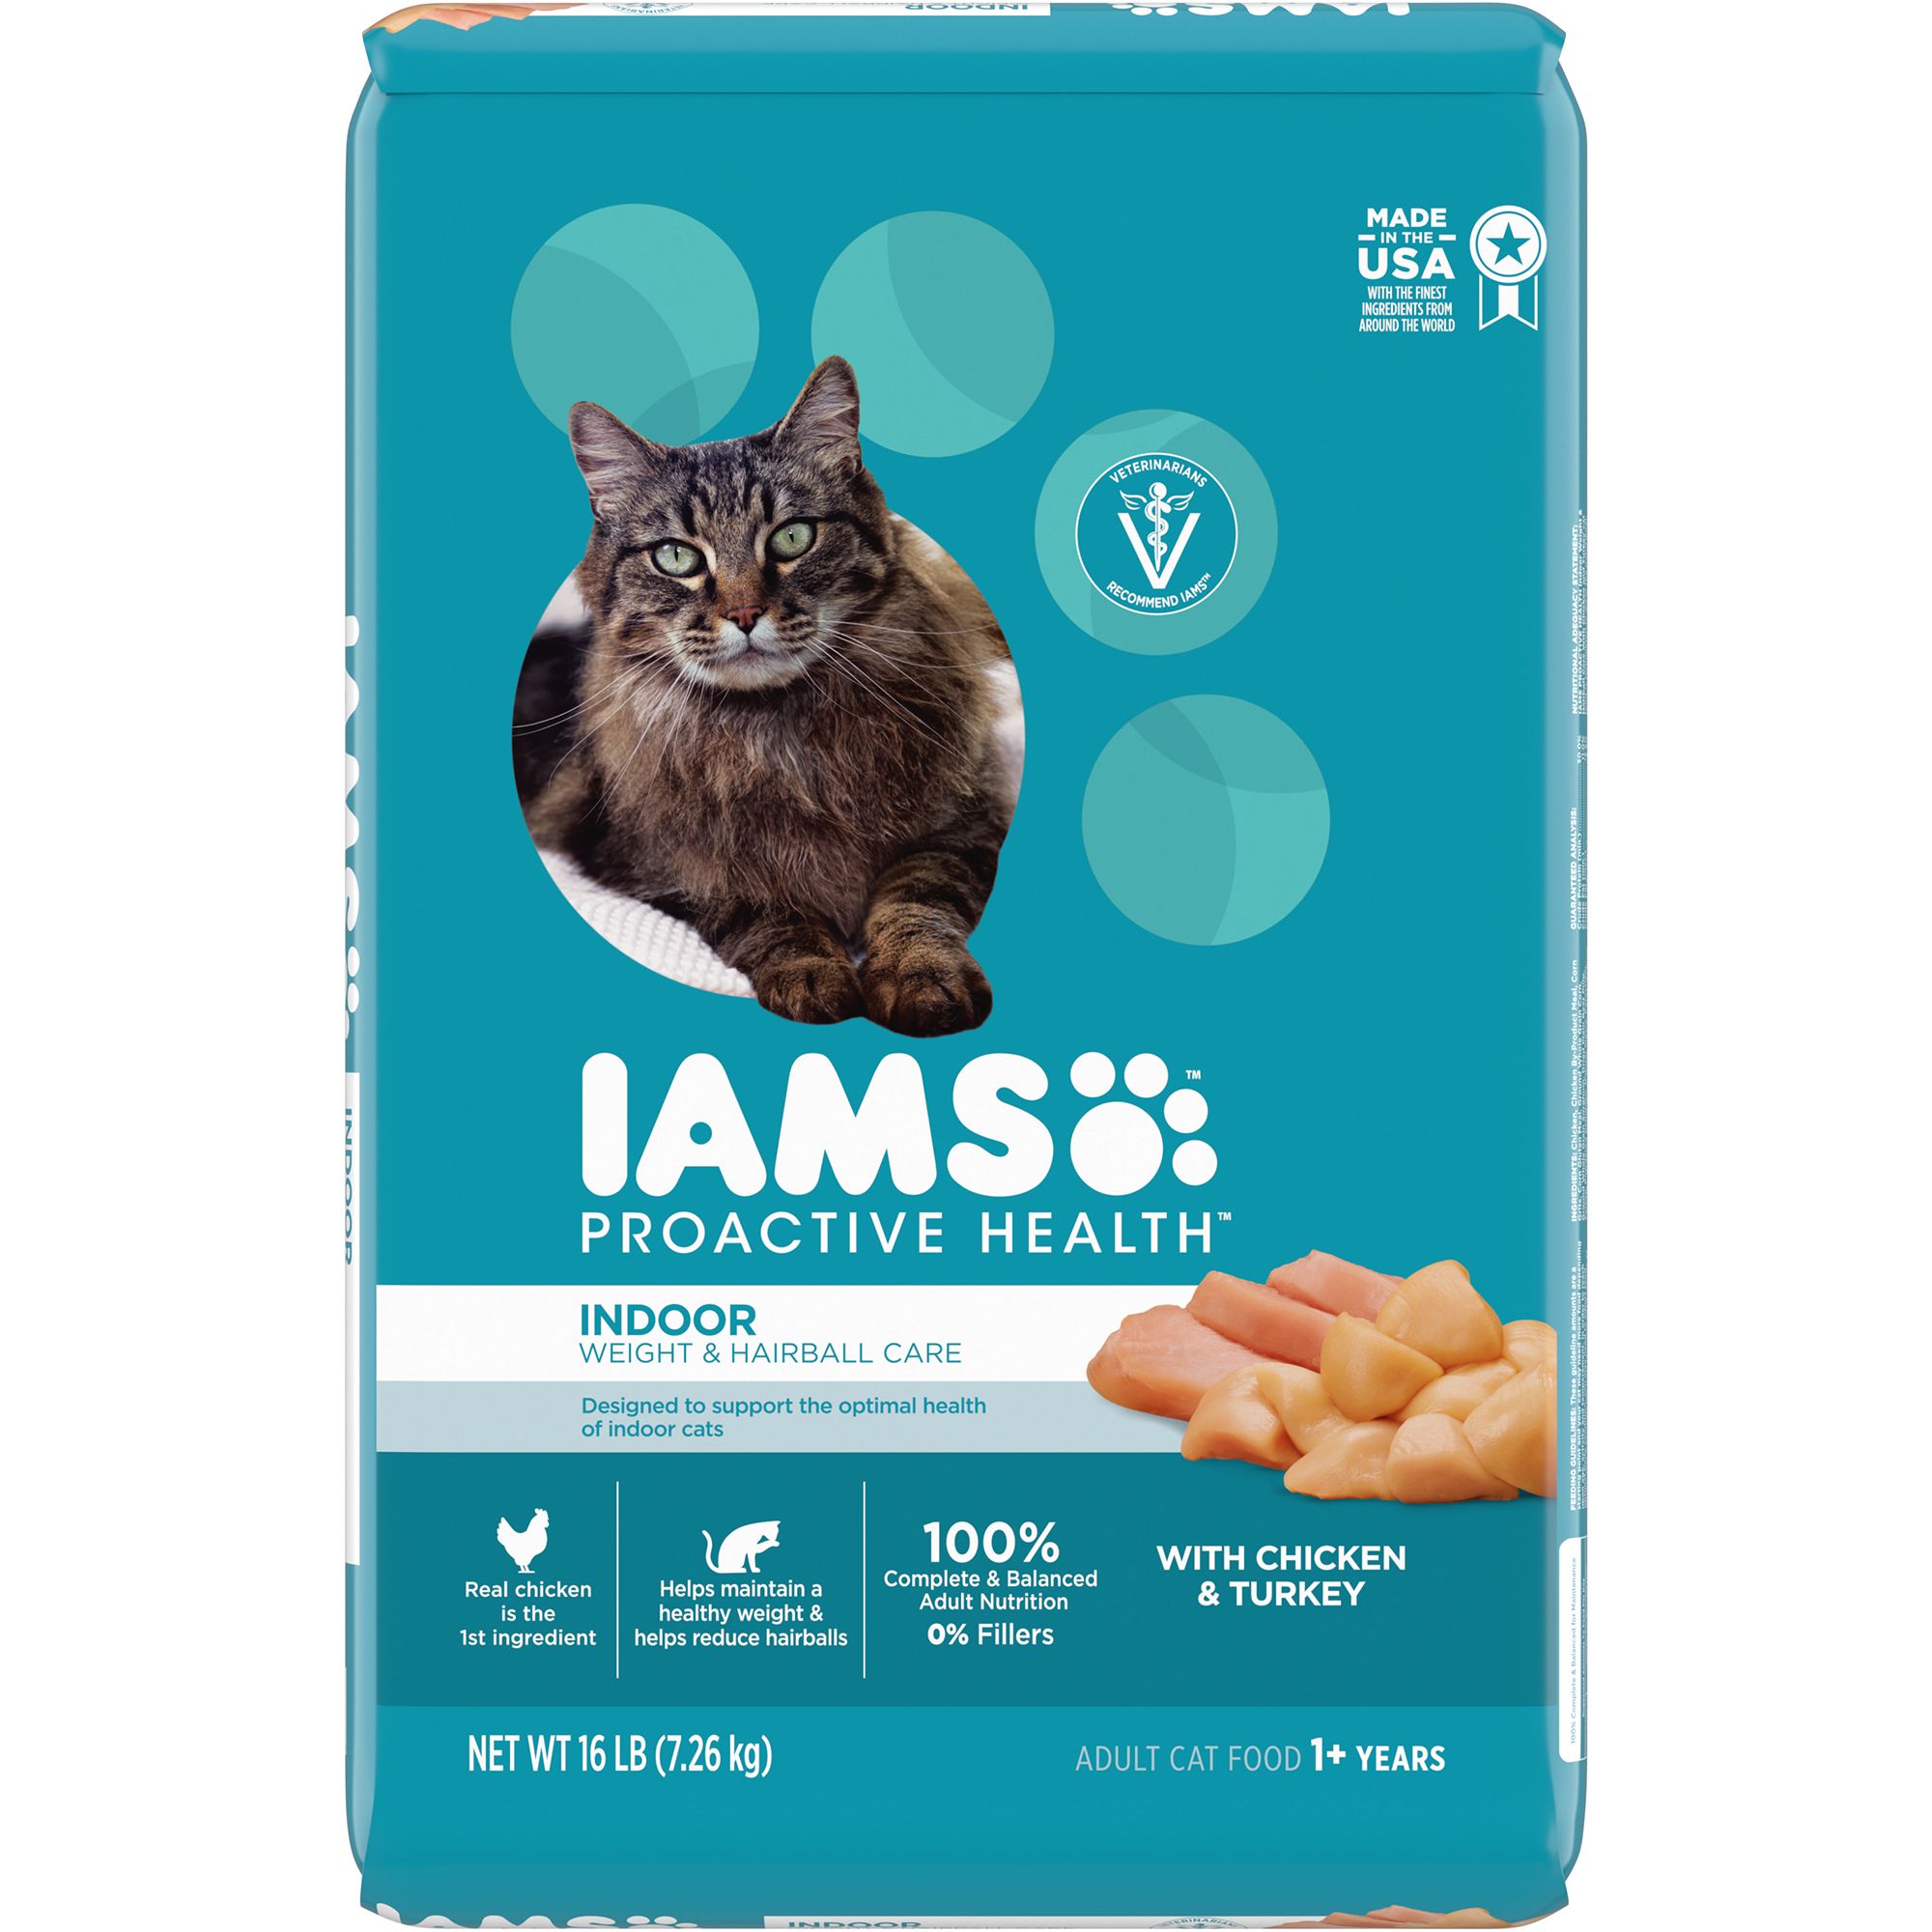 petsmart cat food